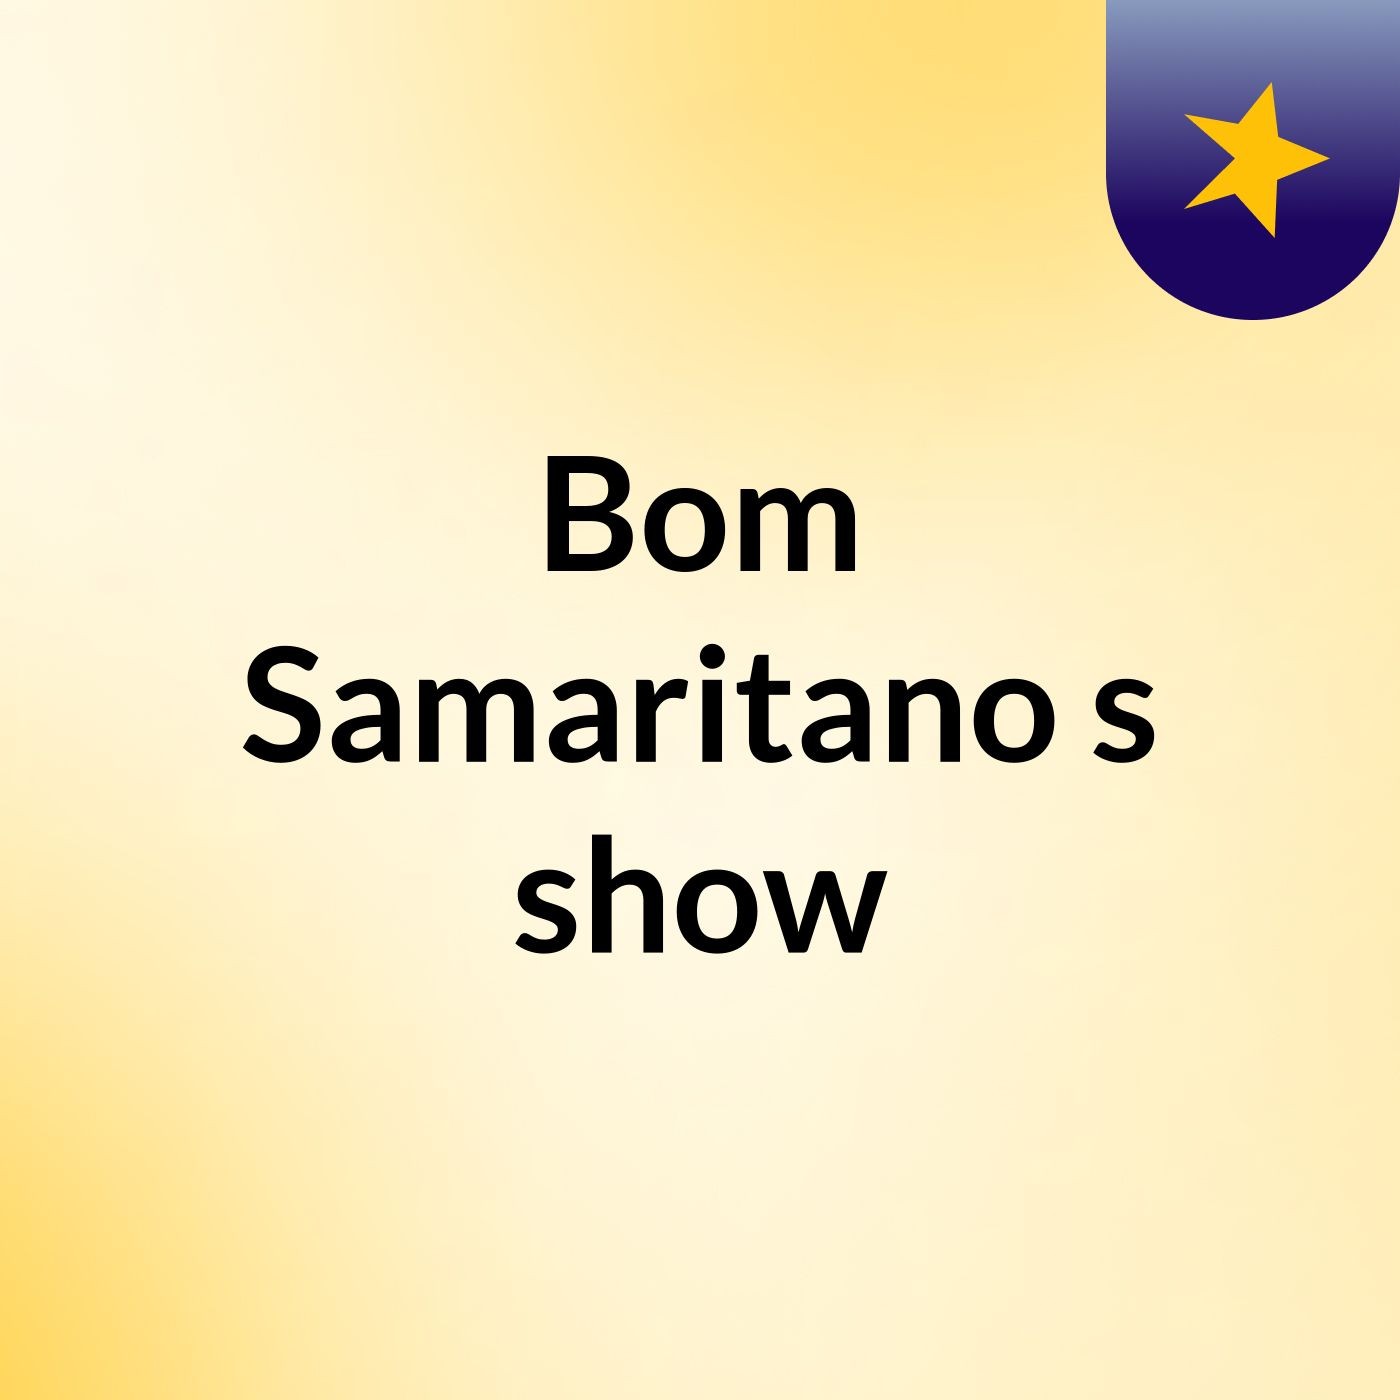 Bom Samaritano's show